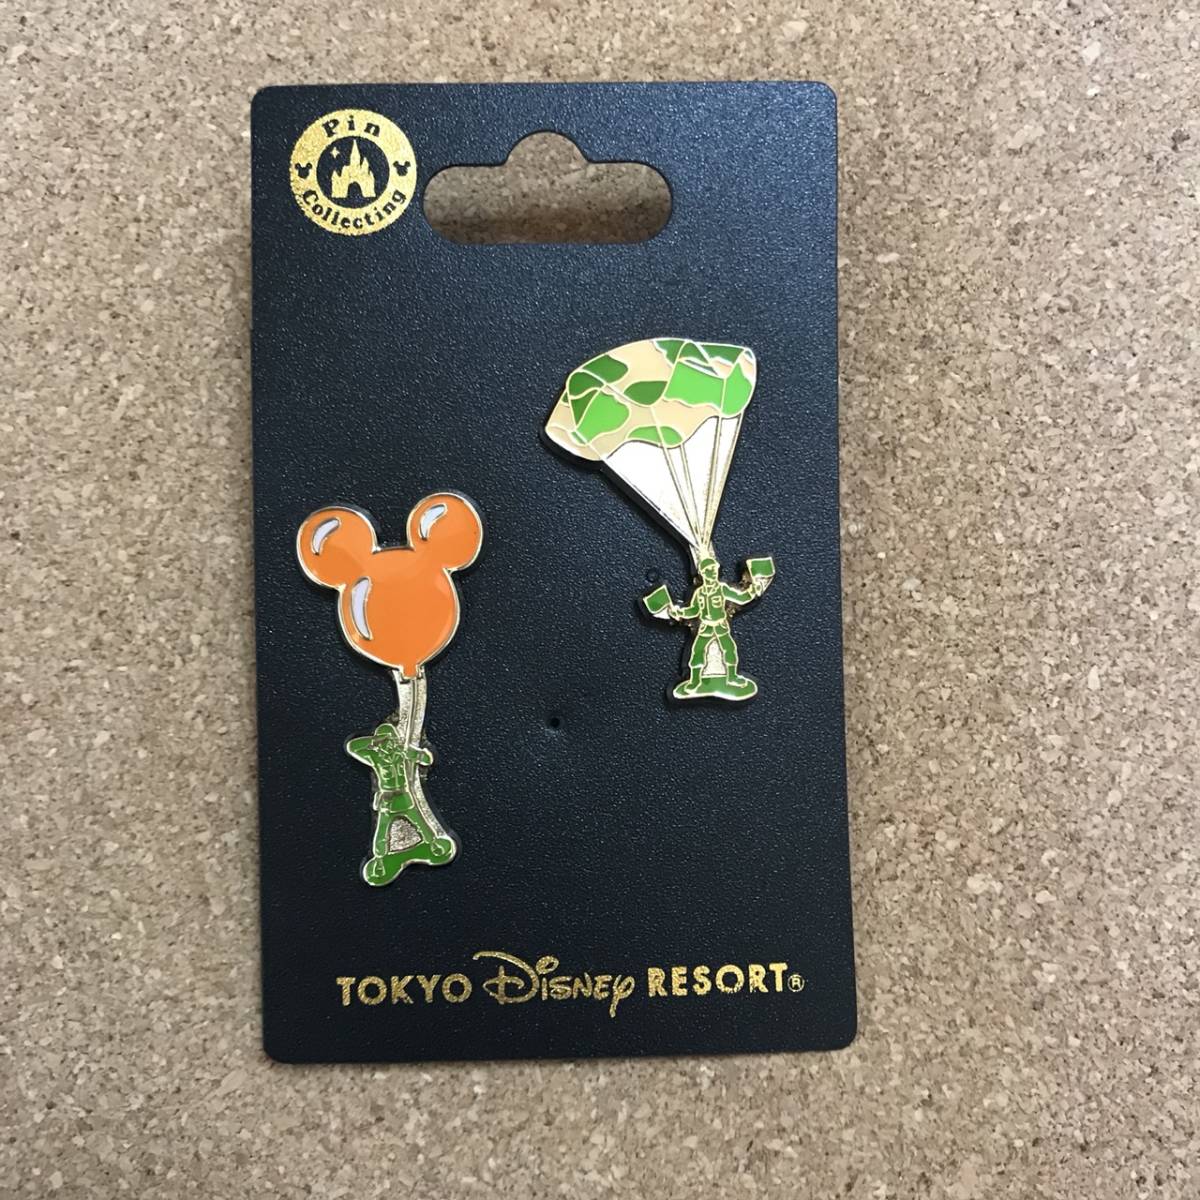  Disney Toy Story : green Army men : pin badge,.., white flag, pin tore